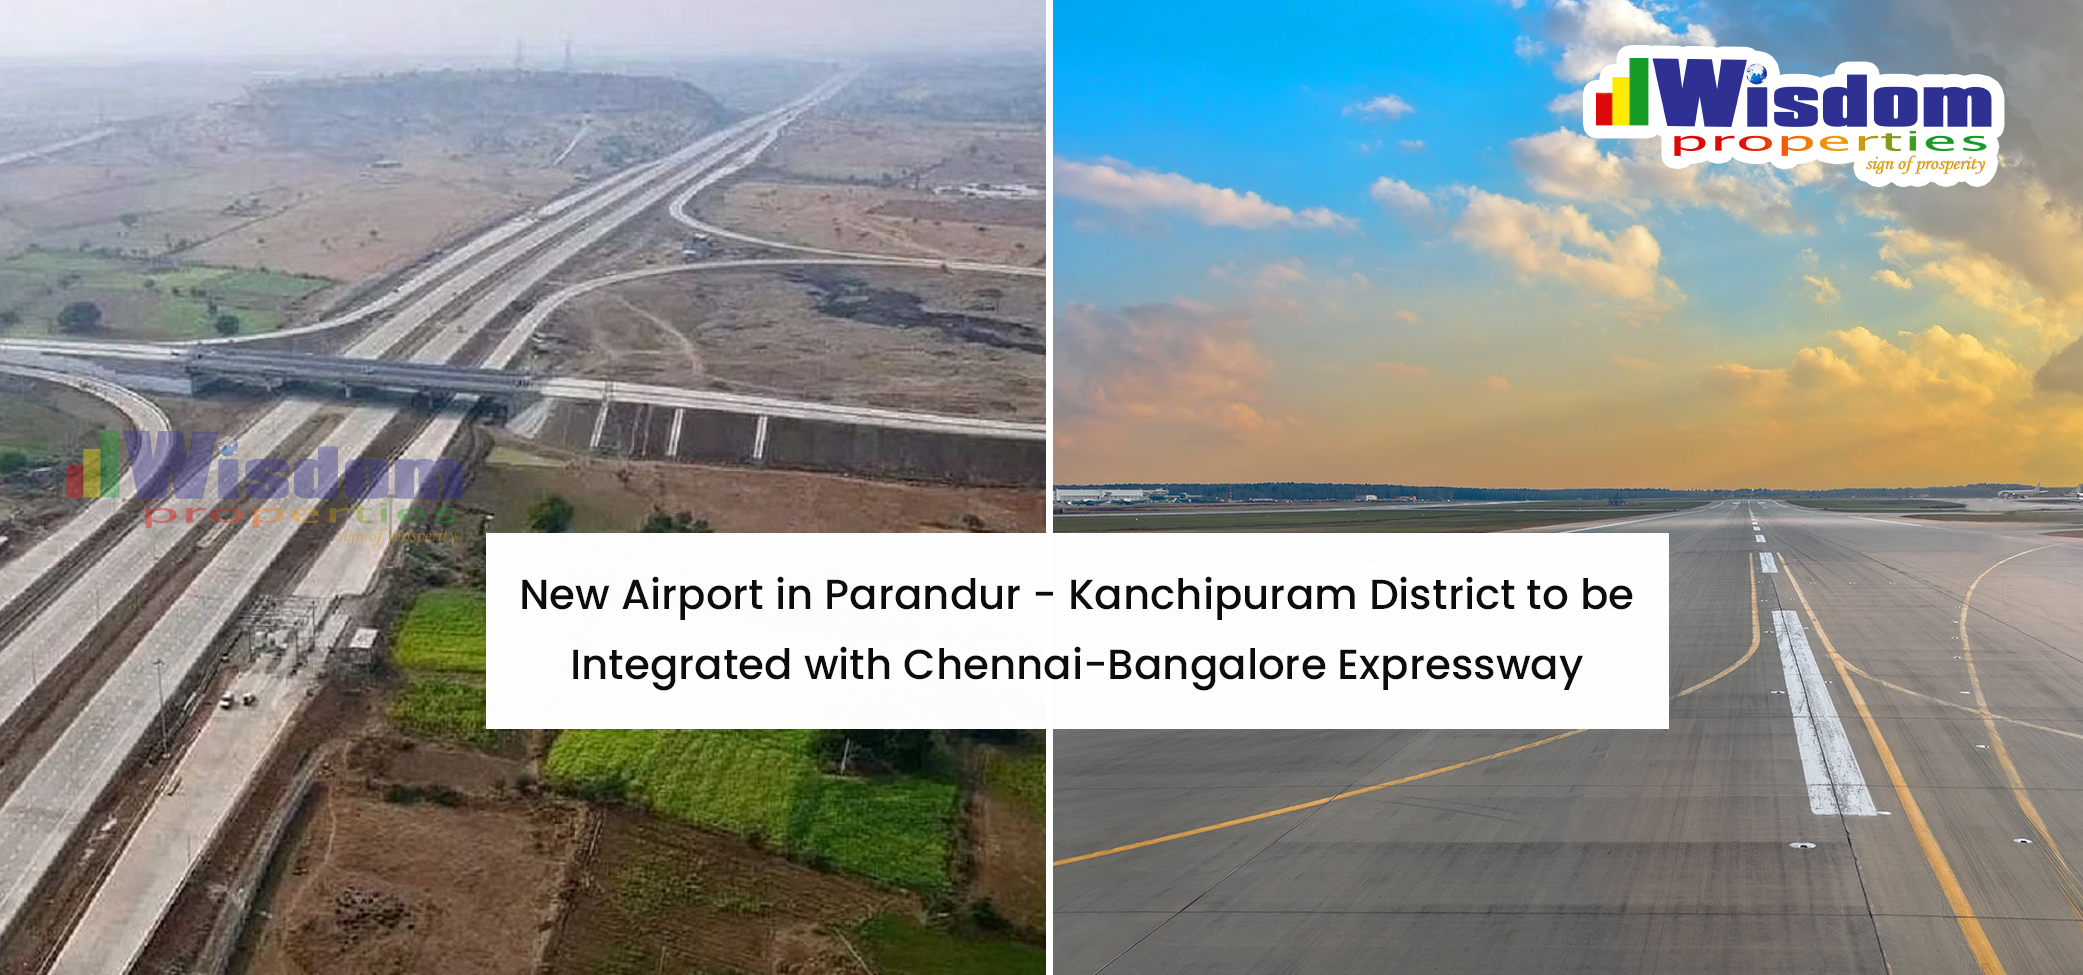 New Airport in Parandur - Kanchipuram District to be Integrated with Chennai-Bangalore Expressway